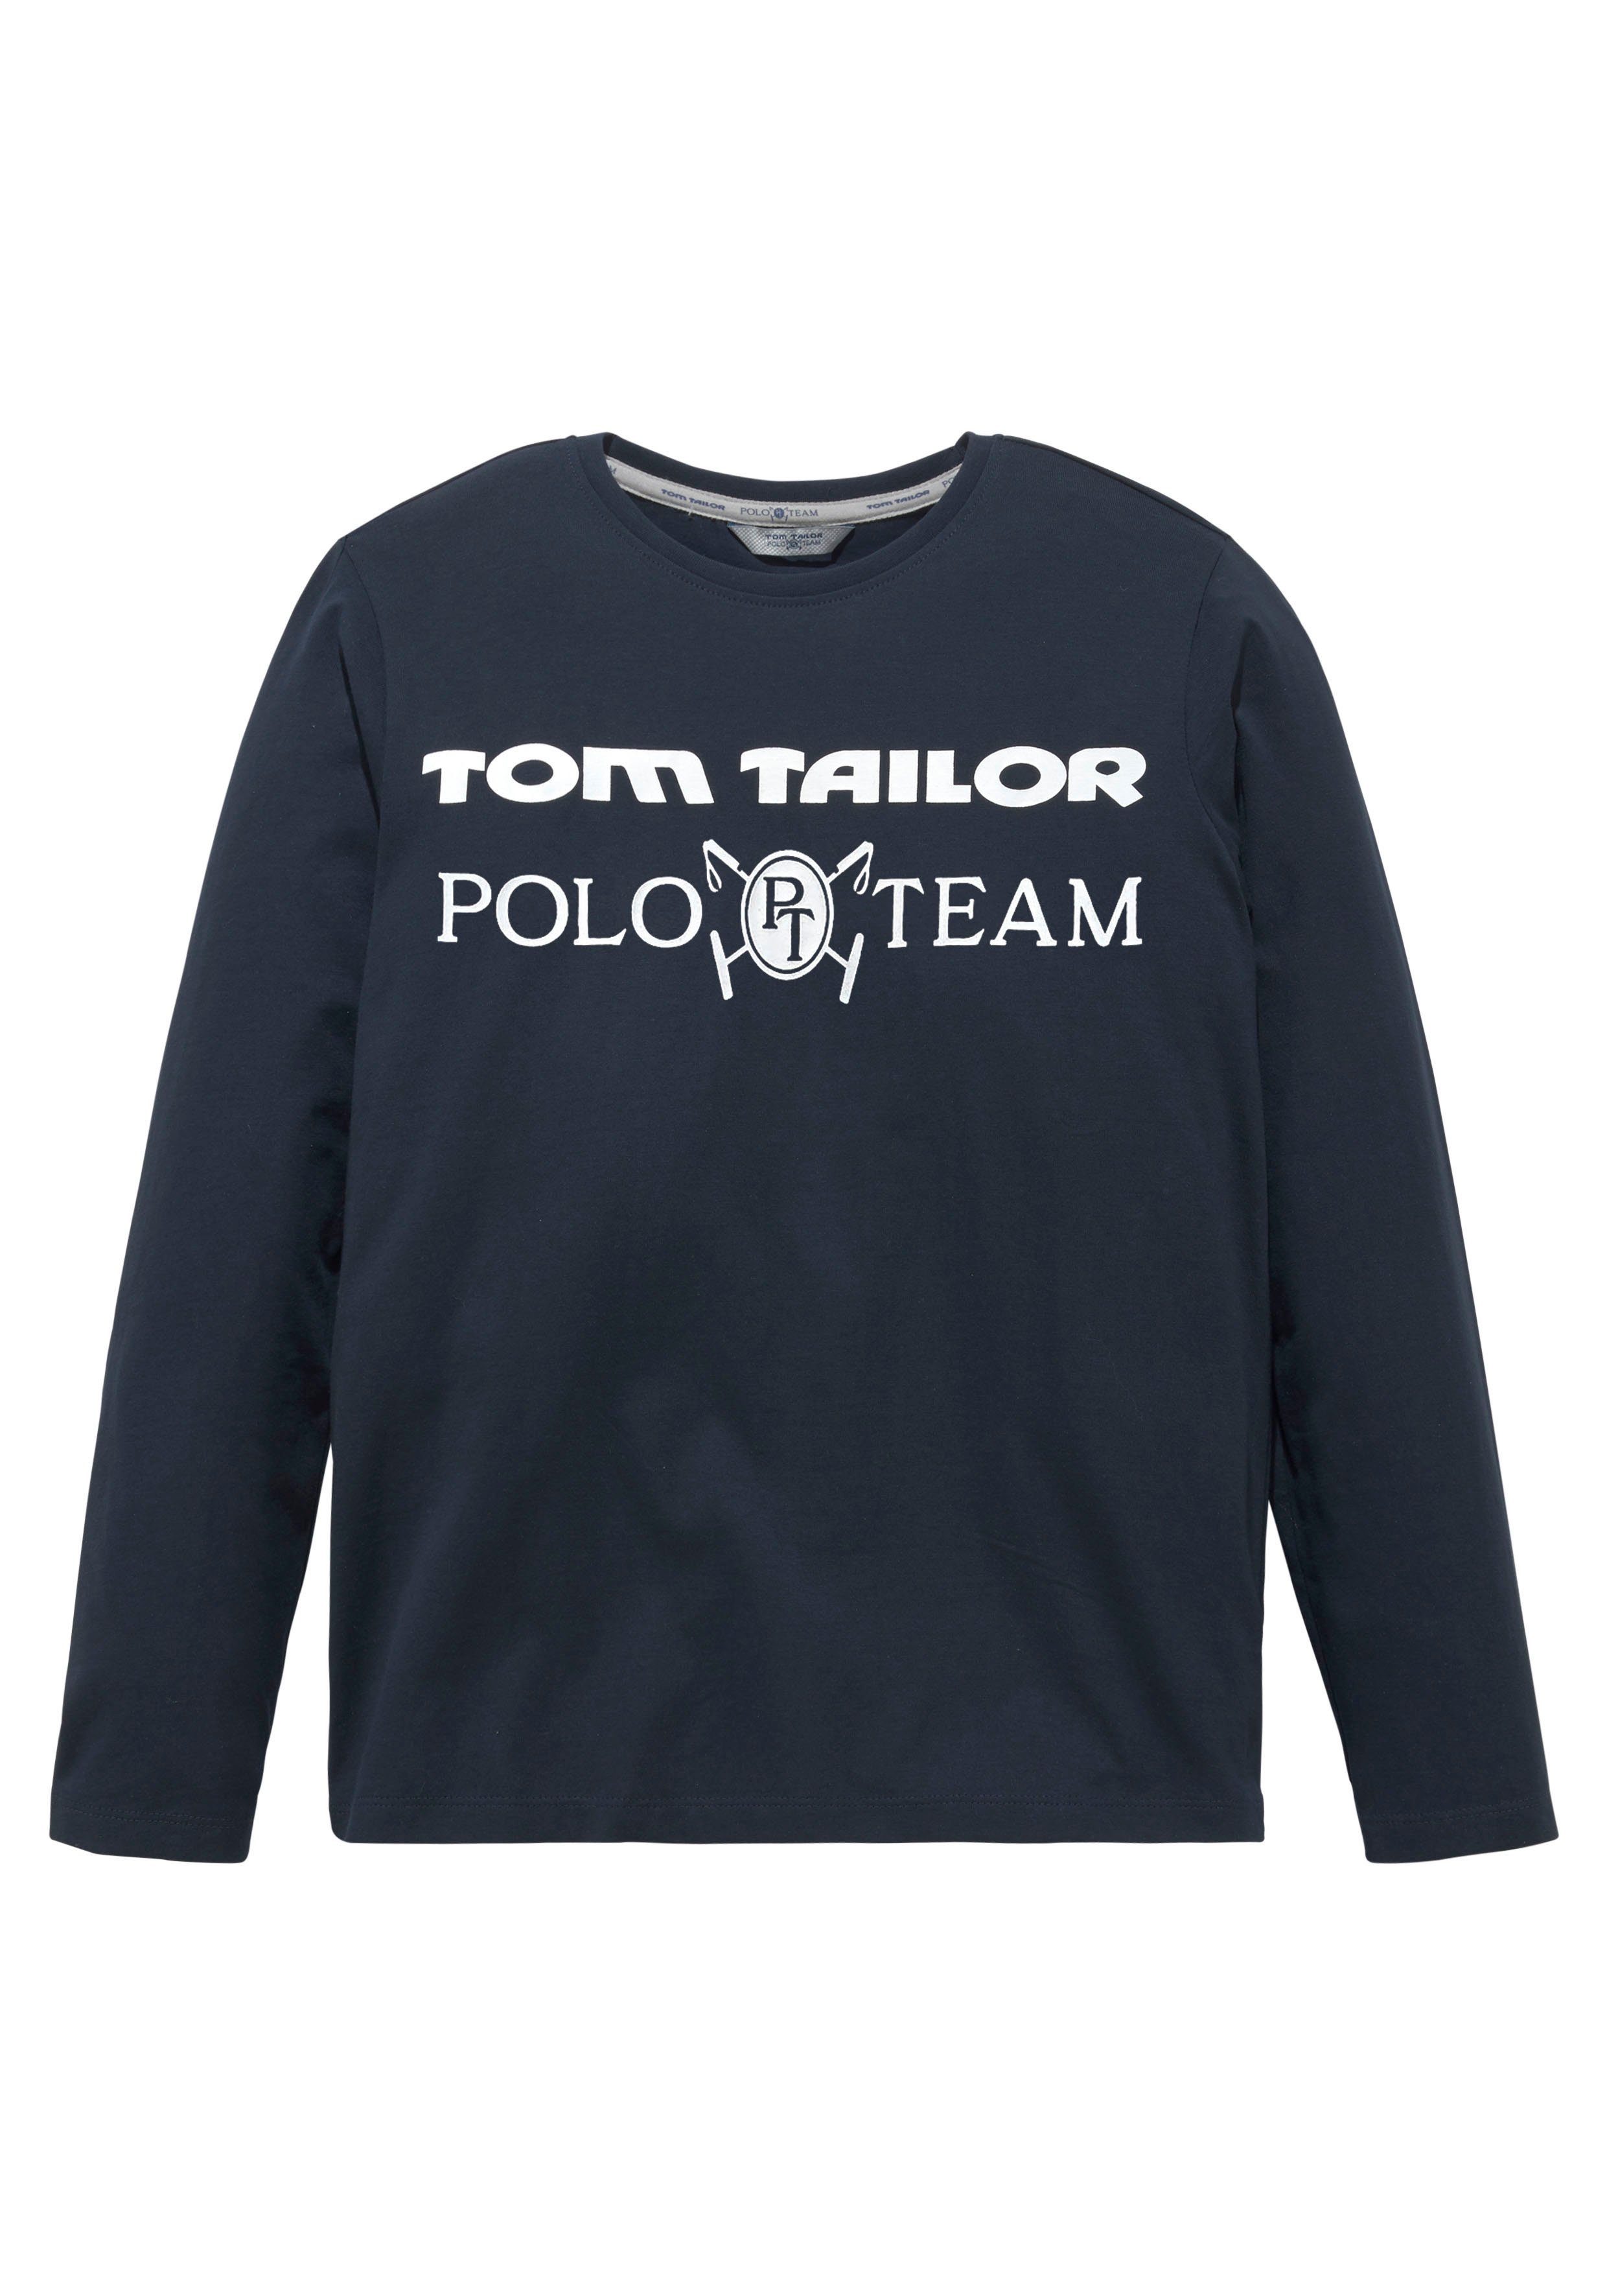 Kinder Teens (Gr. 128 - 182) TOM TAILOR Polo Team Langarmshirt